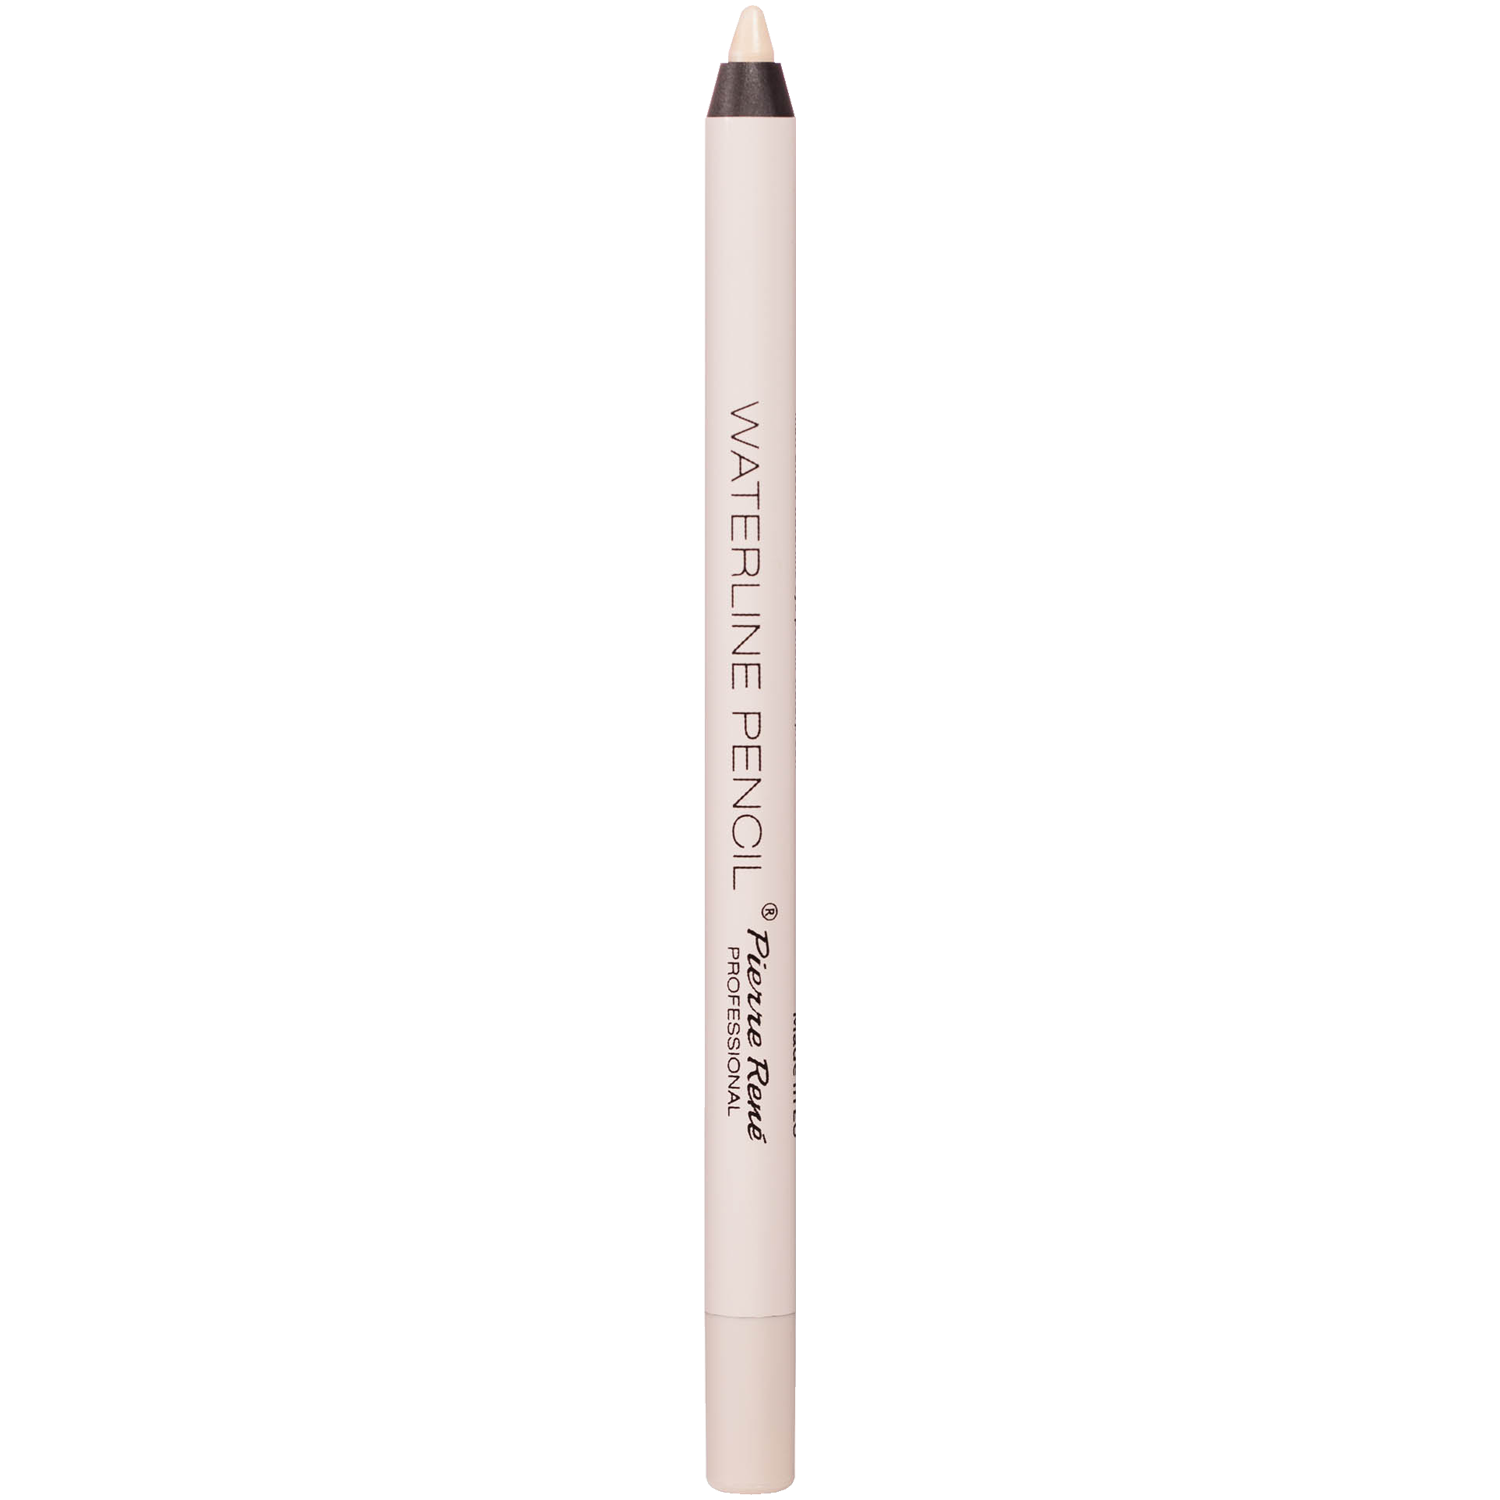 Pierre René Professional карандаш для водной линии глаз, 10 г